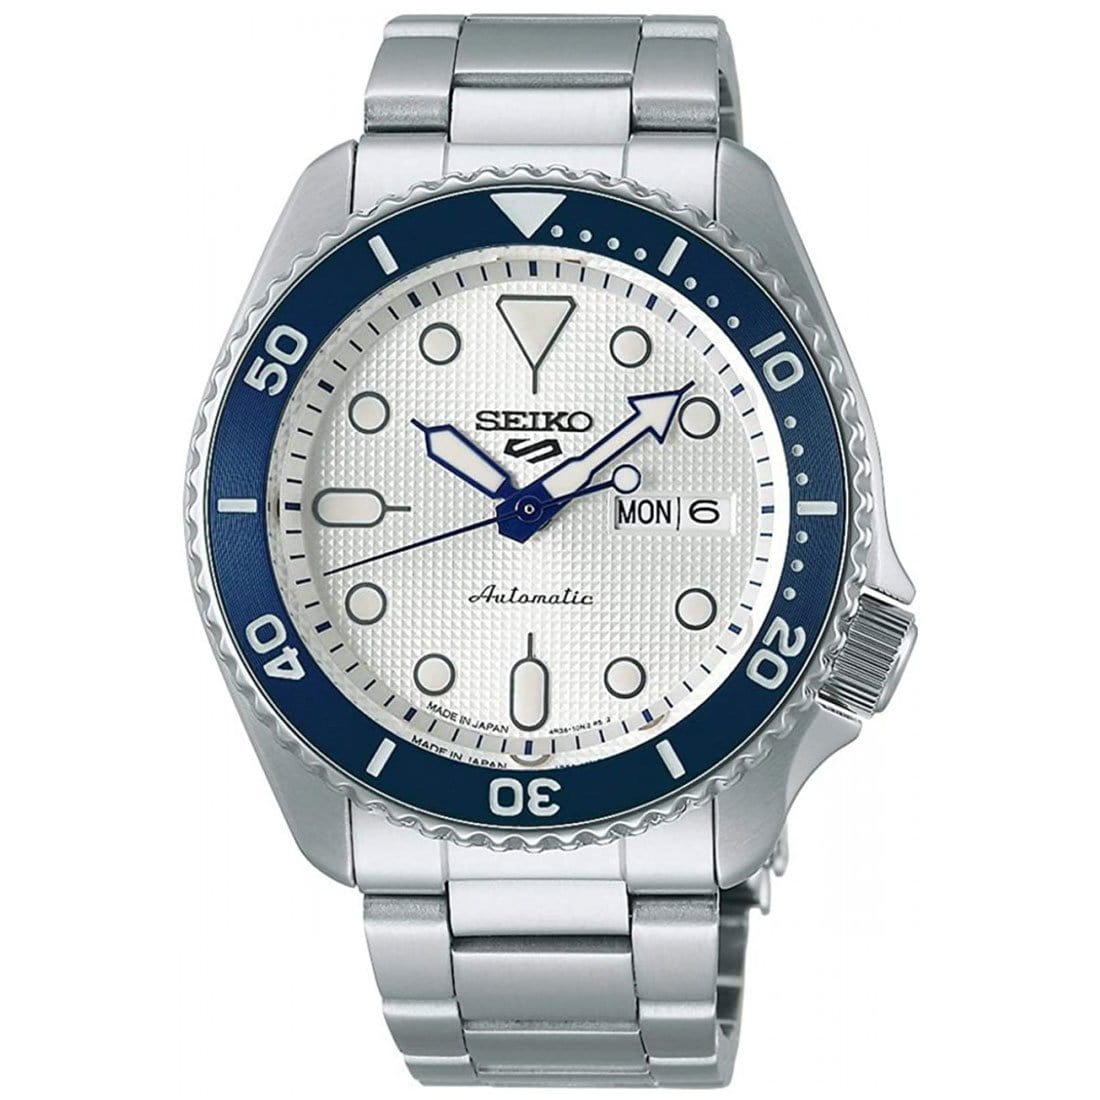 Seiko 5 Sports 140th Anniversary Limited Edition Automatic JDM Watch SBSA109